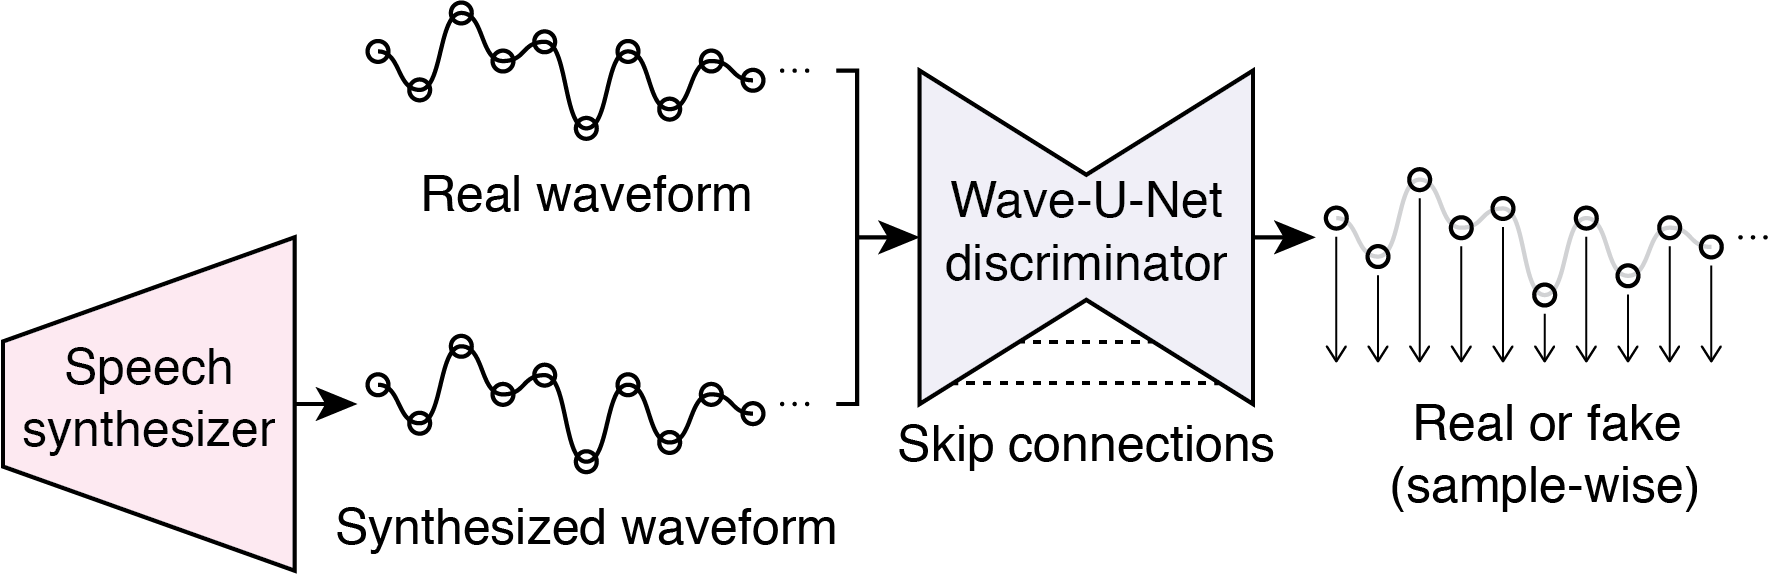 Wave-U-Net Discriminator